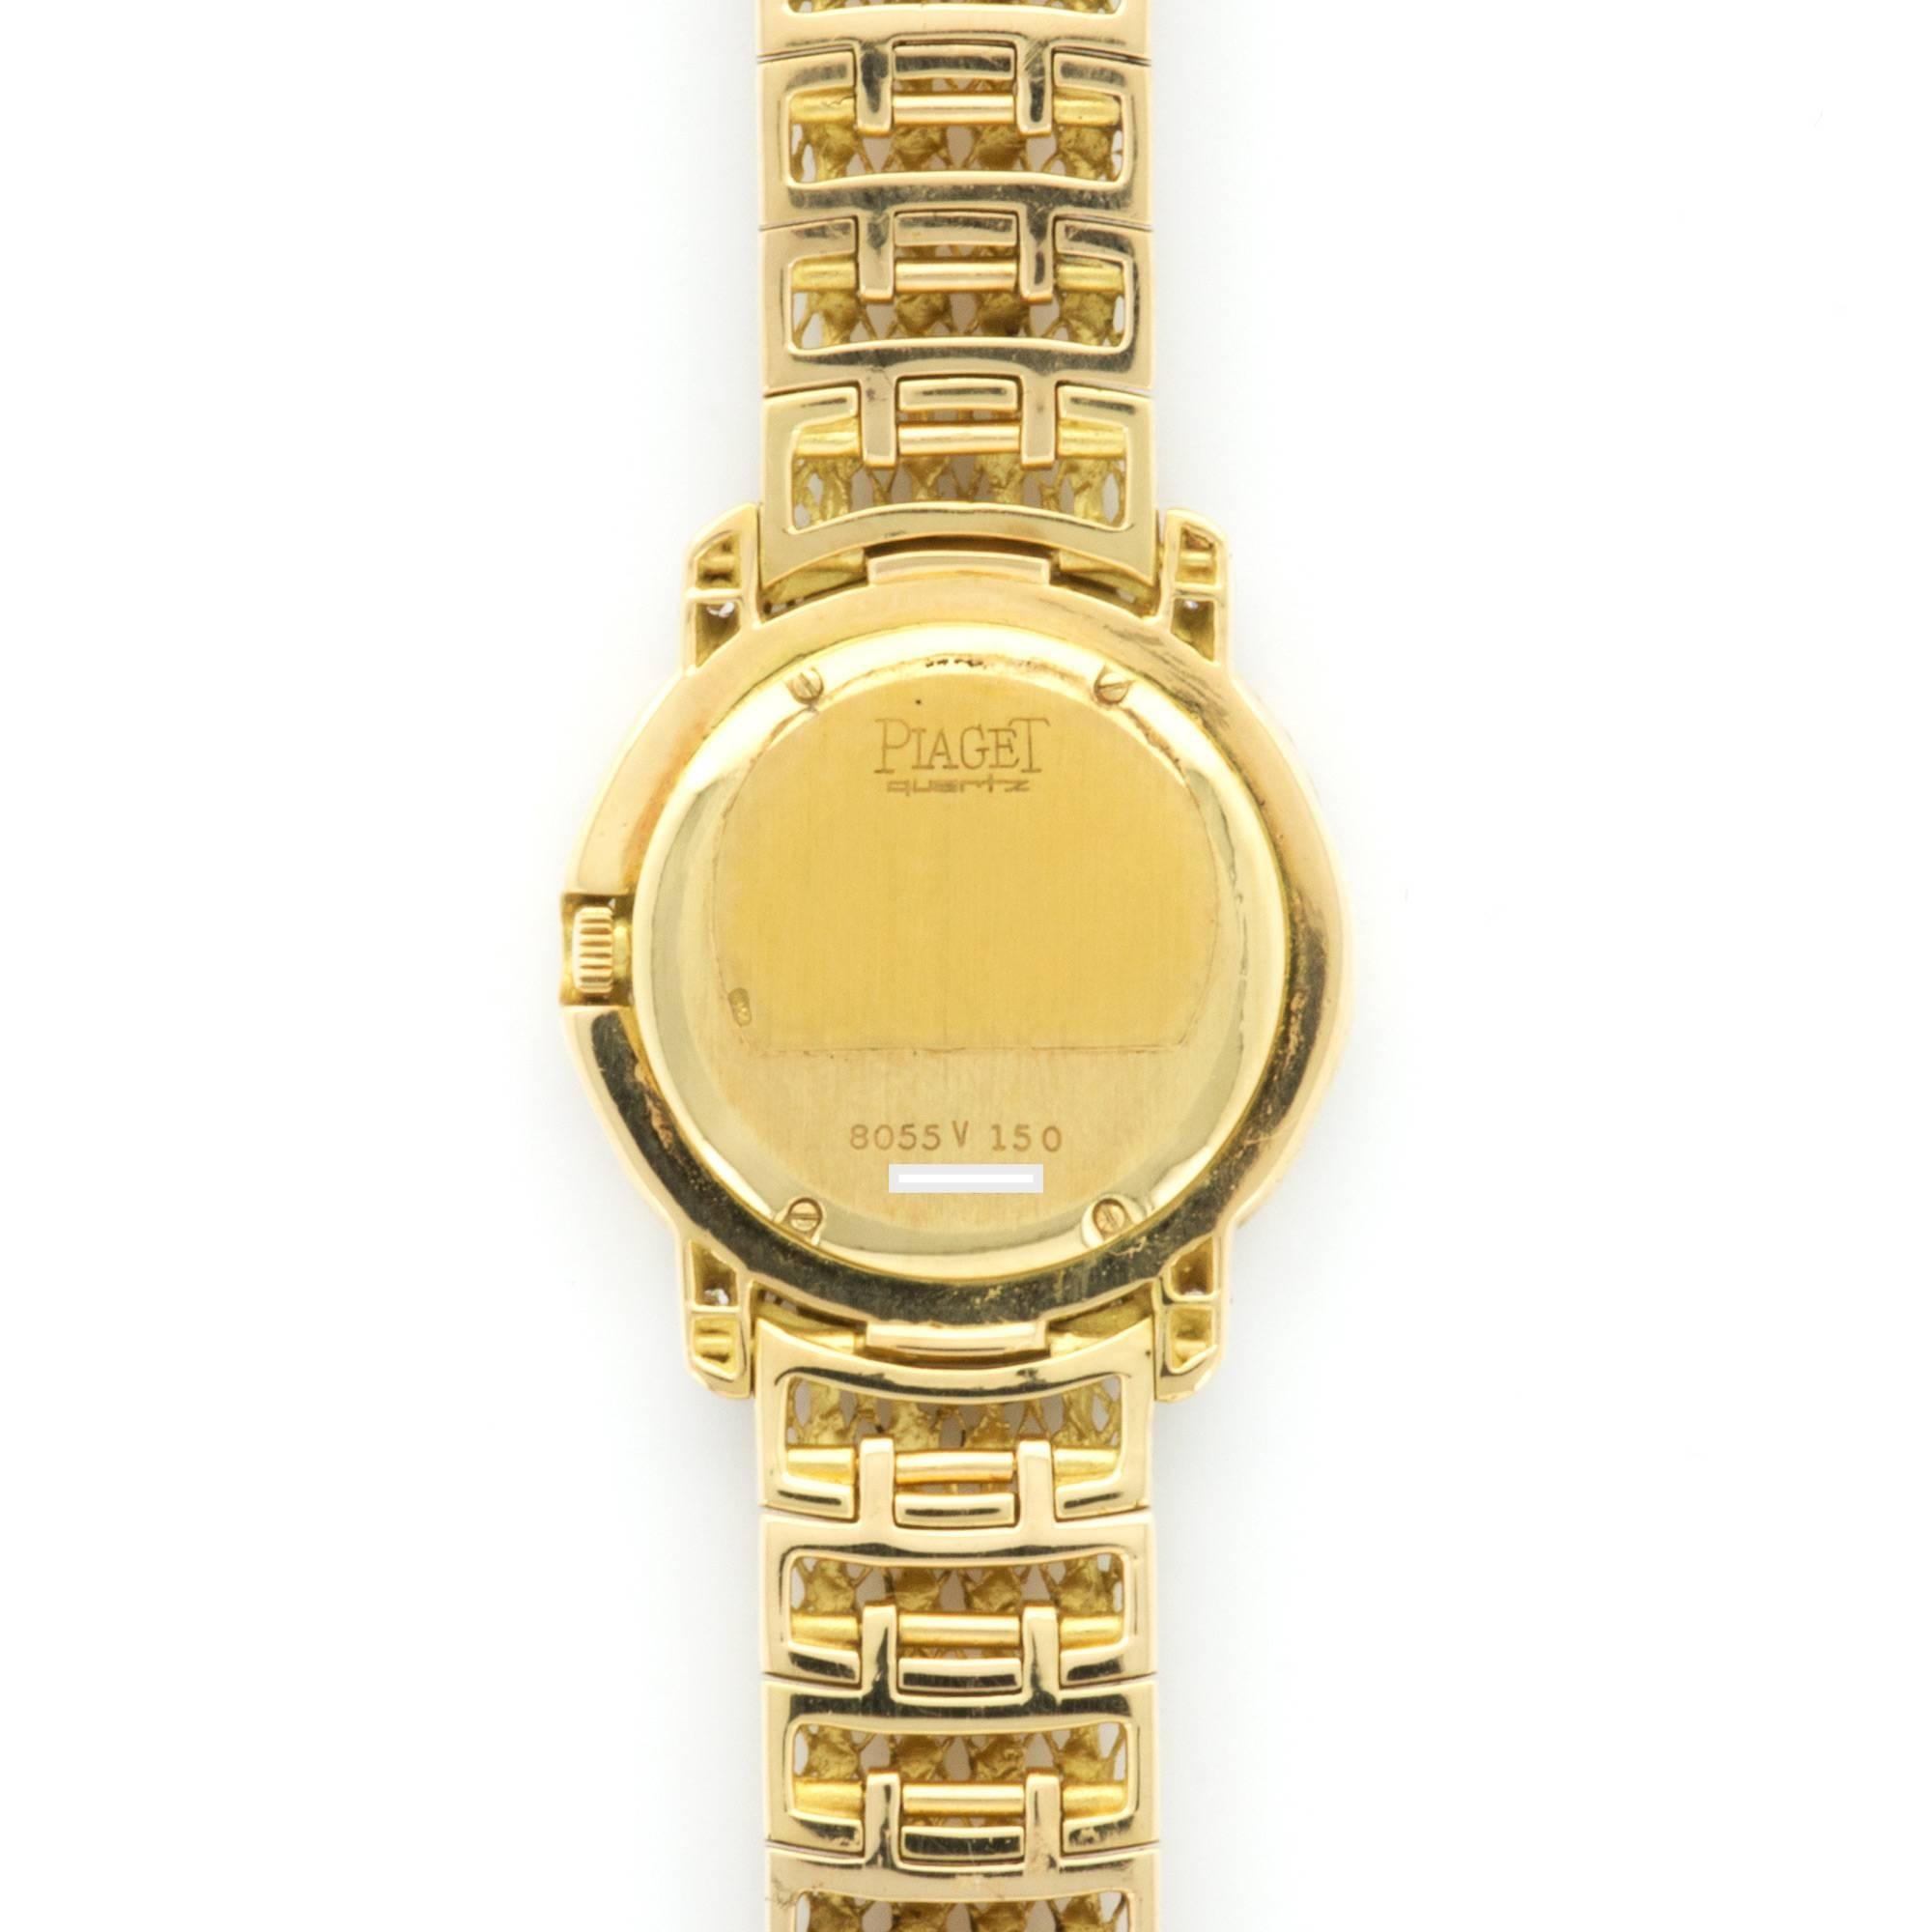 Modern Lady's Piaget Yellow Gold Diamond & Sapphire Bracelet Watch